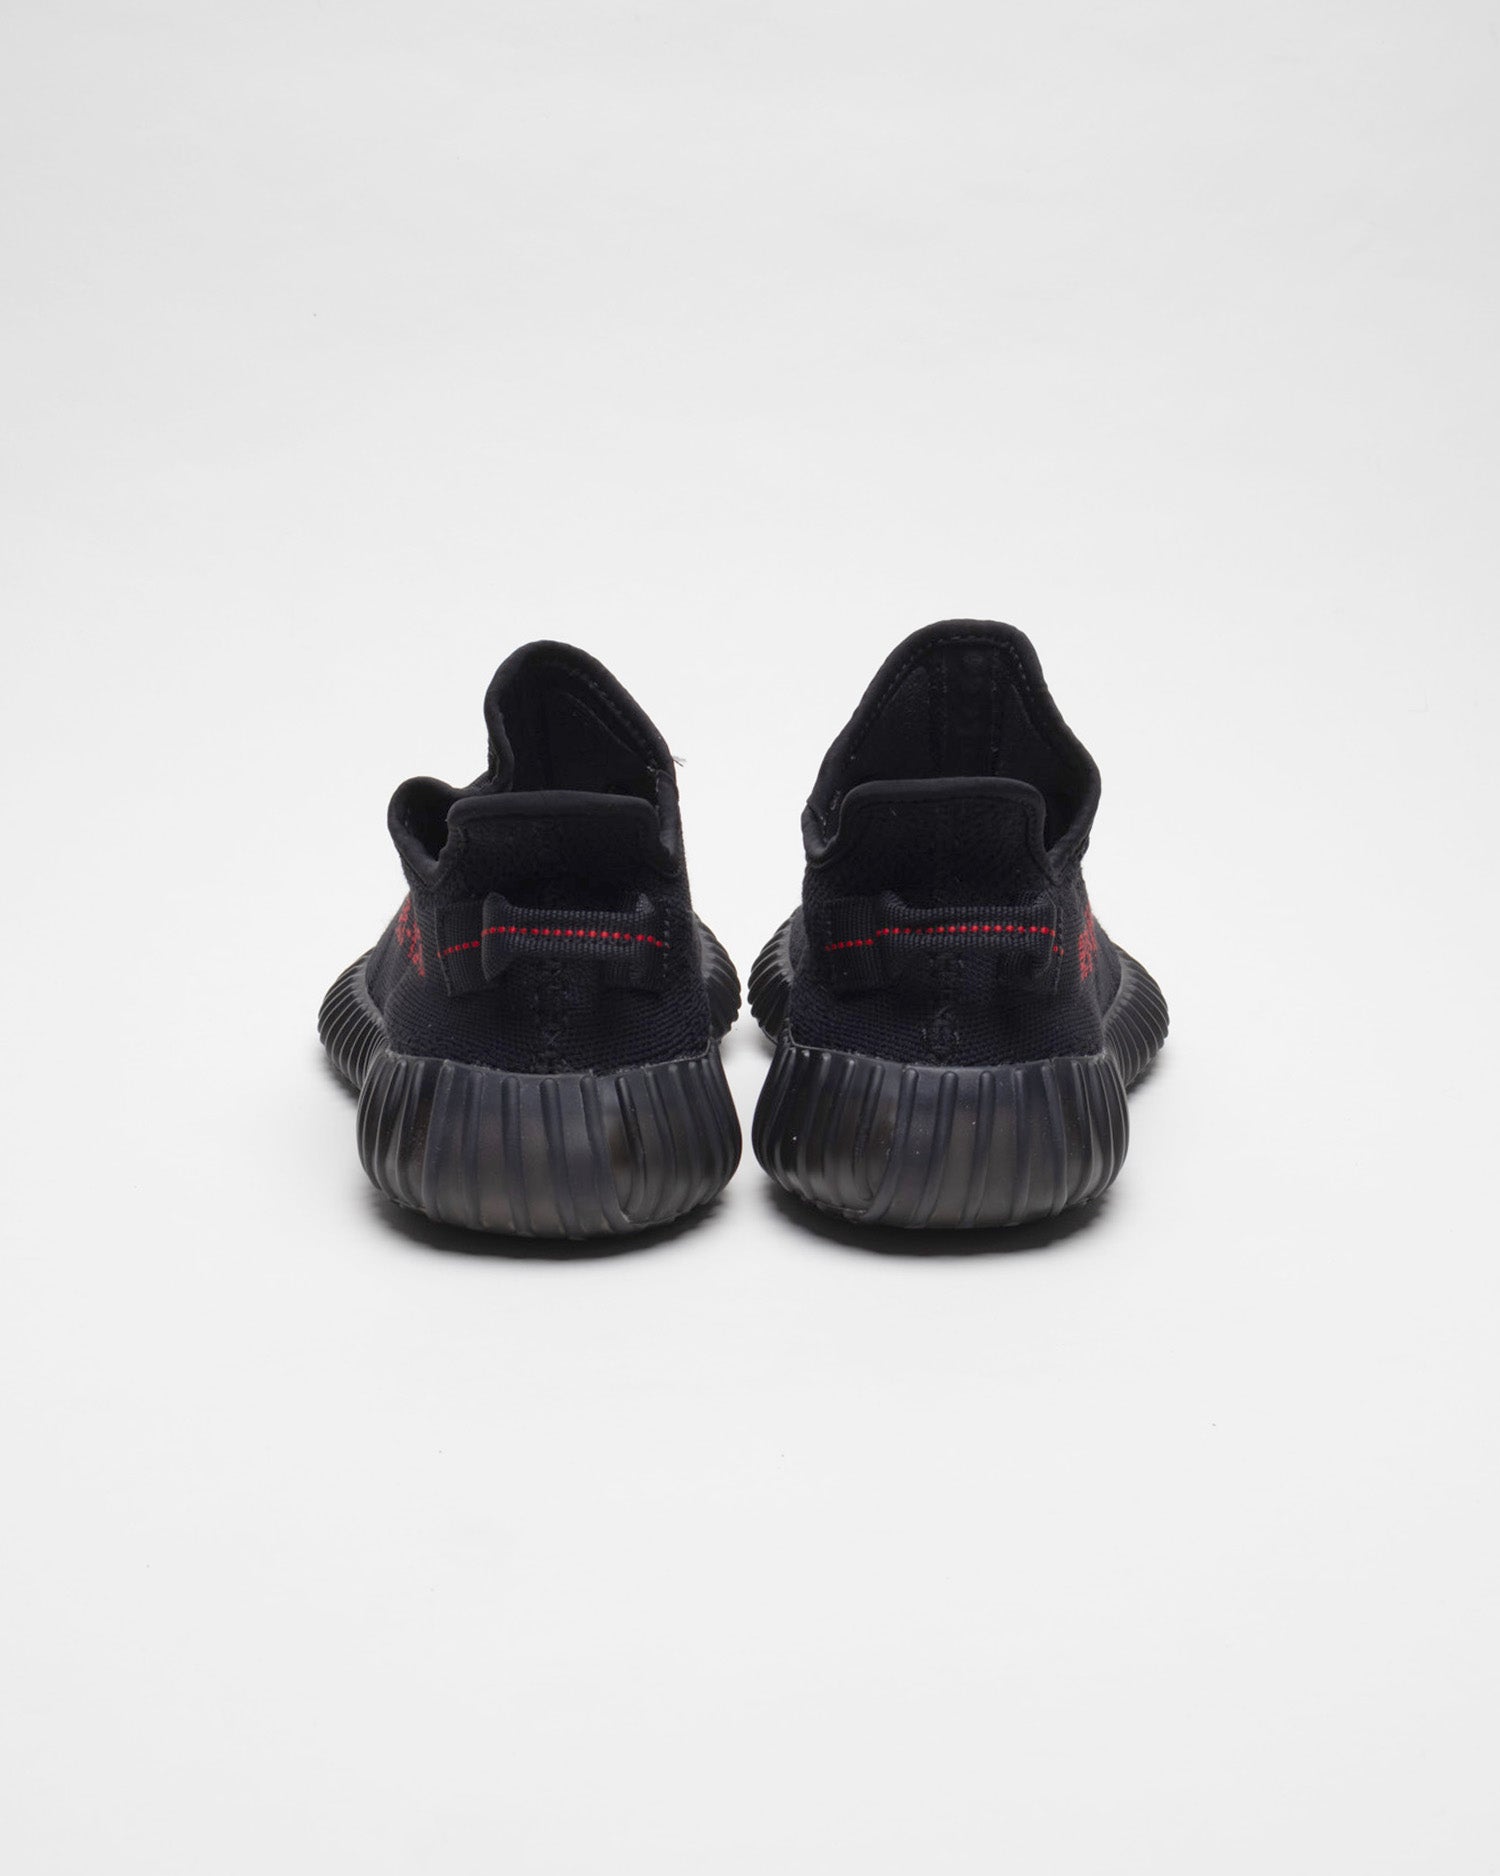 Adidas Yeezy Boost 350 V2 Sneaker Black Red